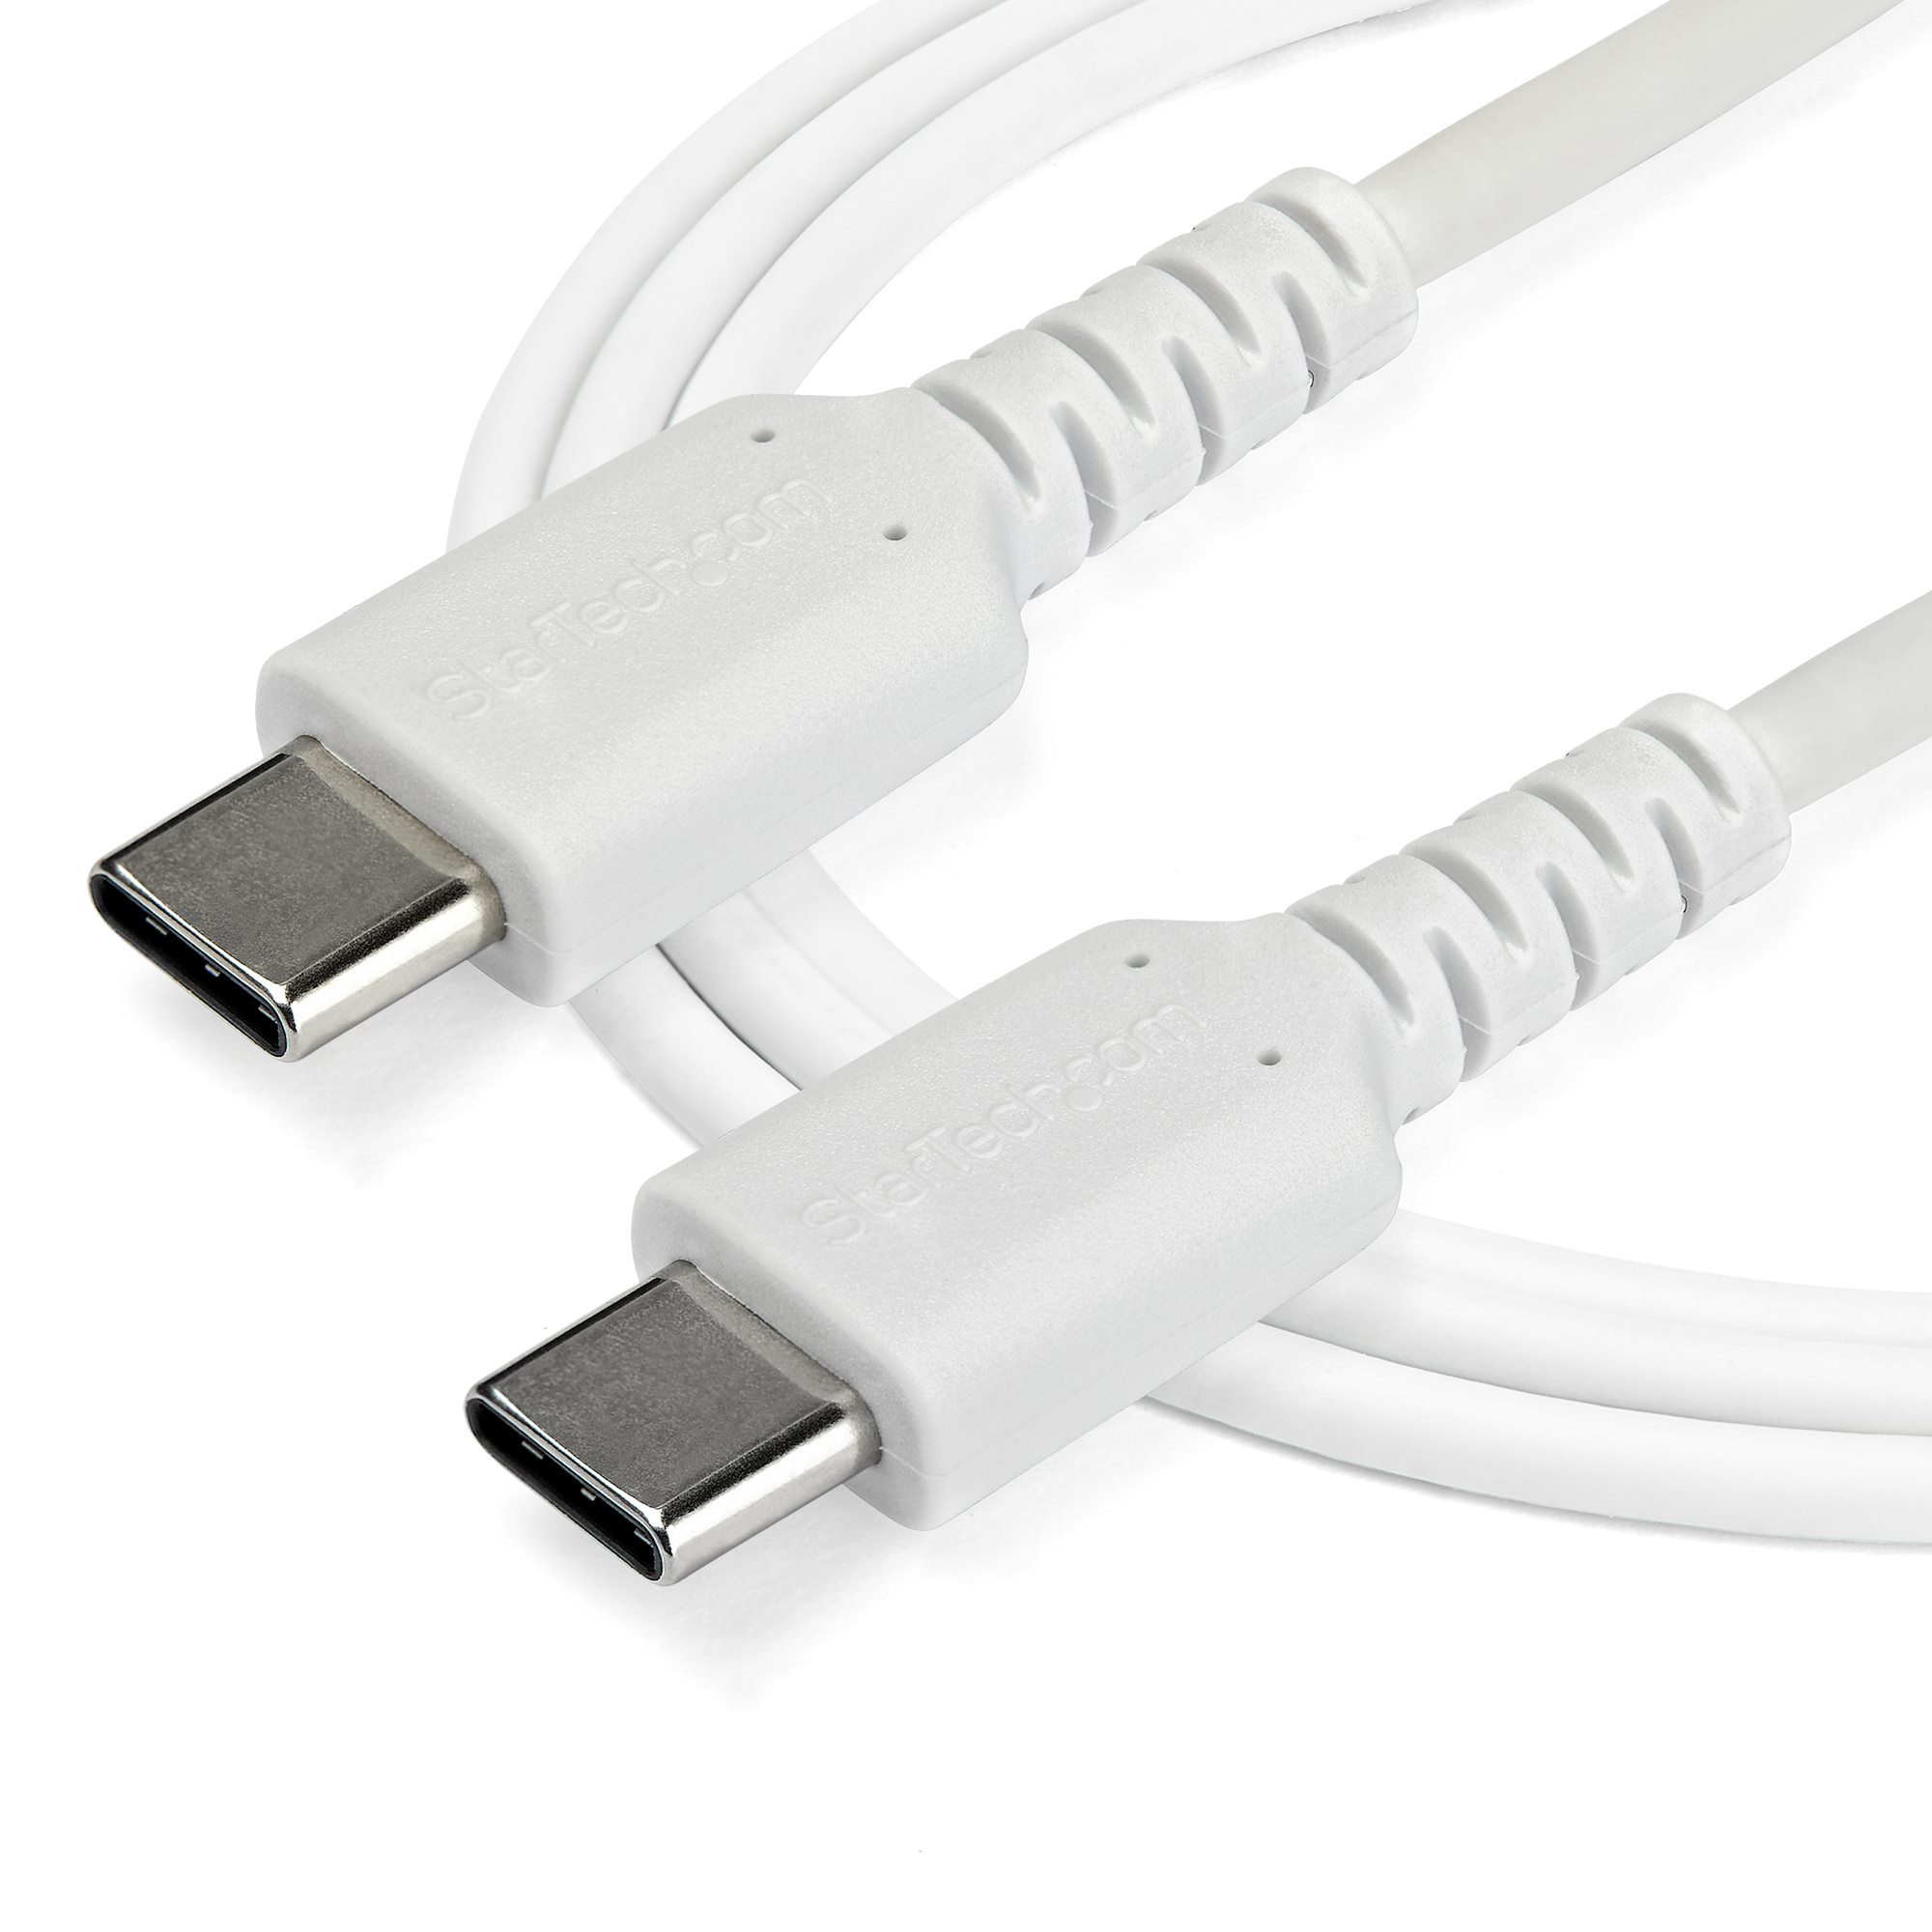 6.6ft (2m) USB 2.0 A/B Cable - Black, USB 2.0 Cables